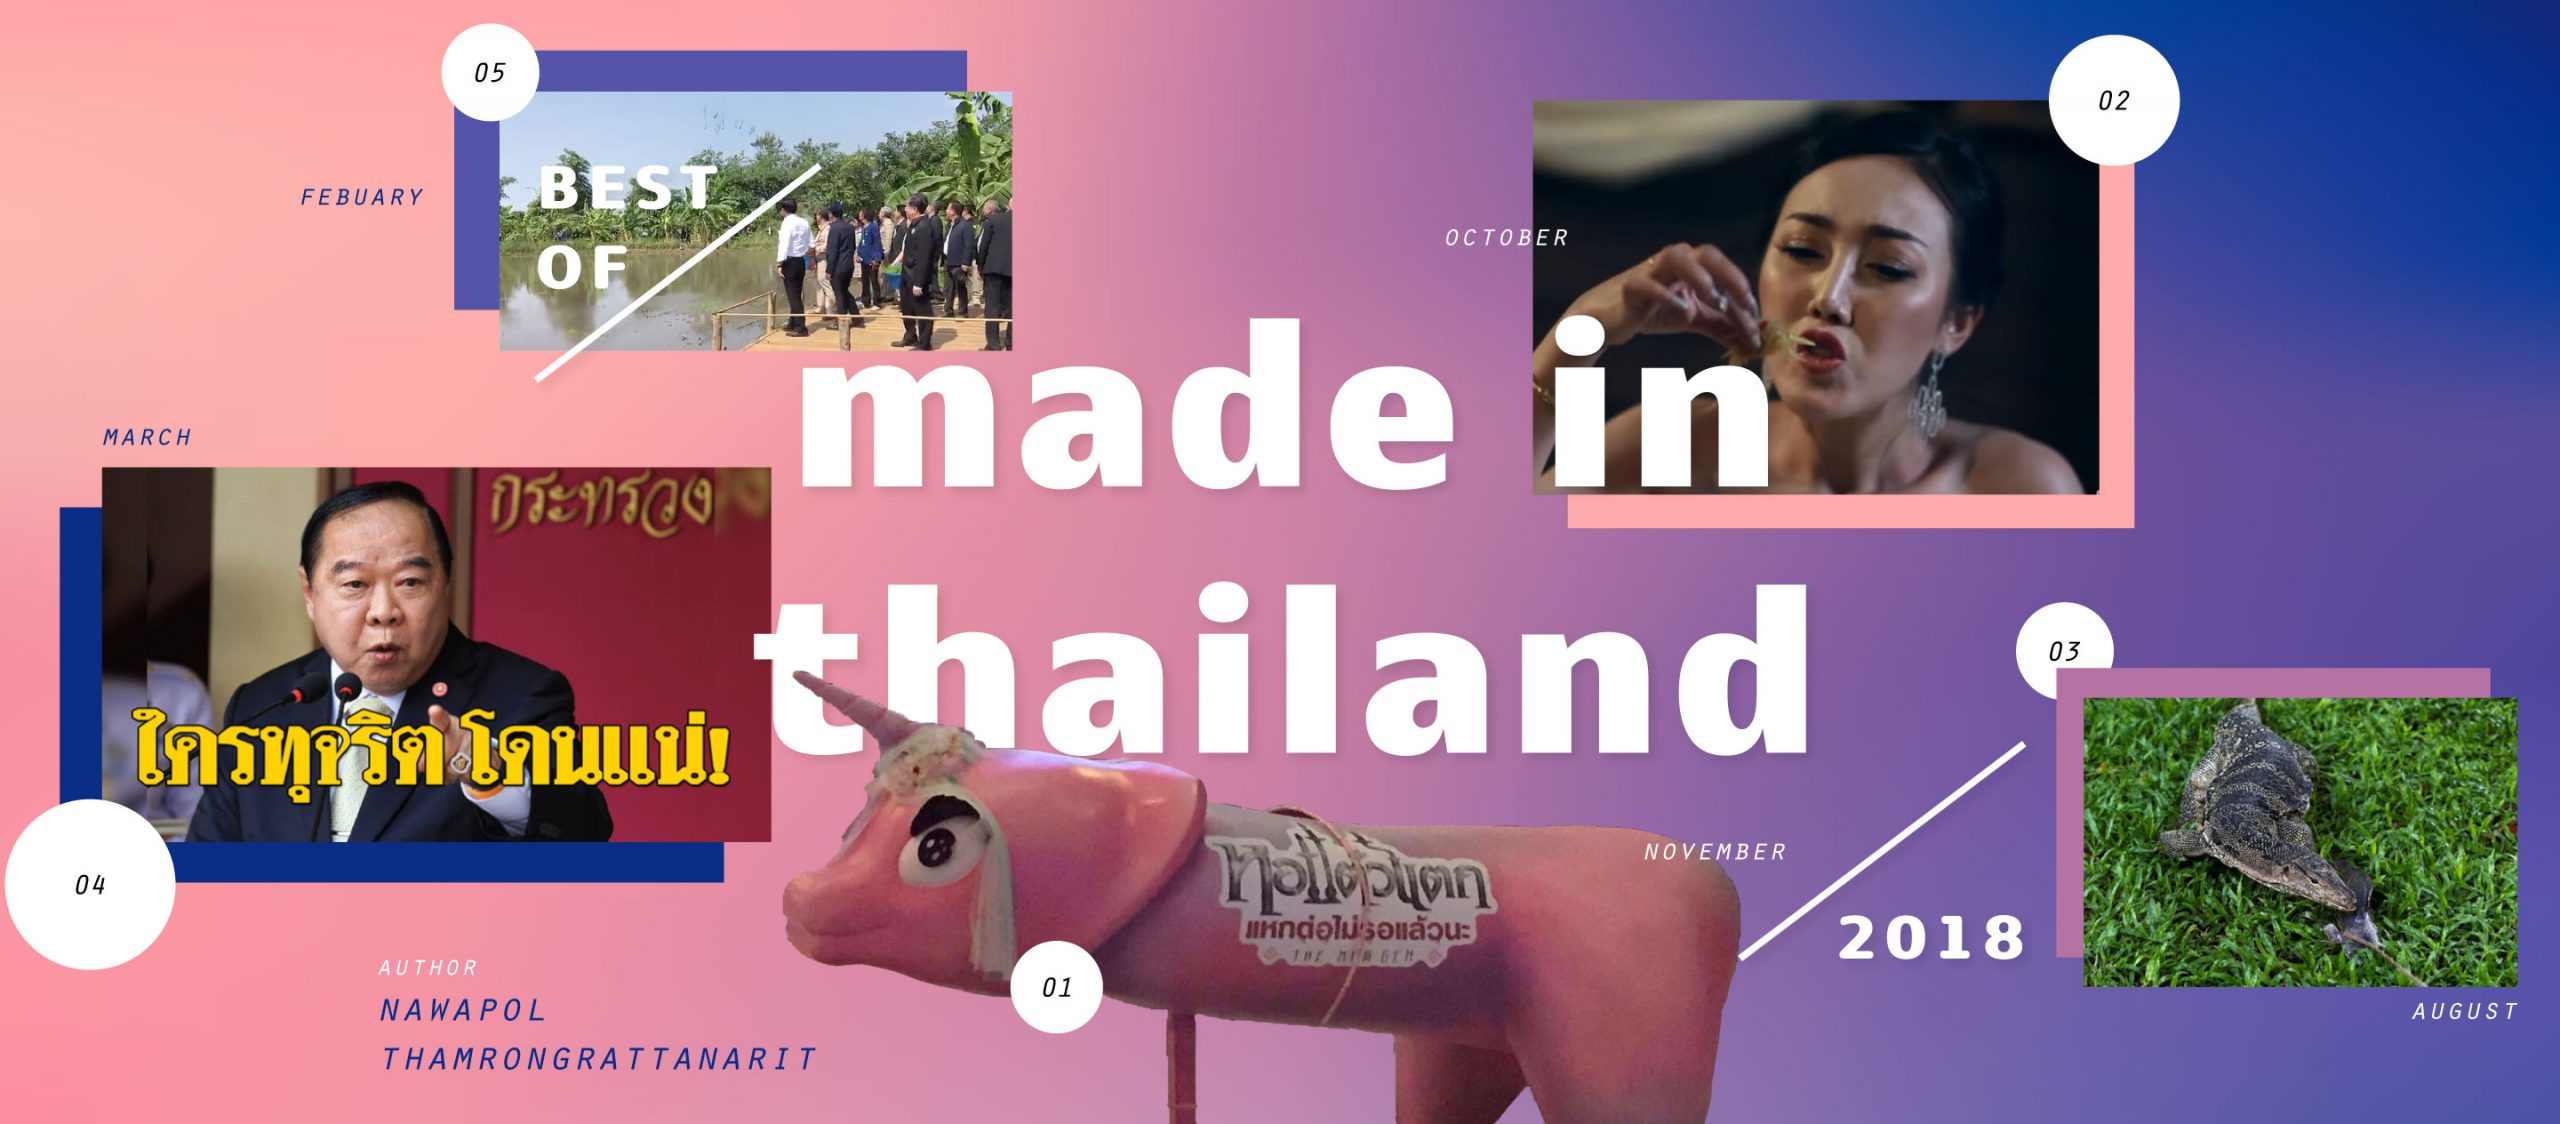 best of a day online : เมดอินไทยแลนด์